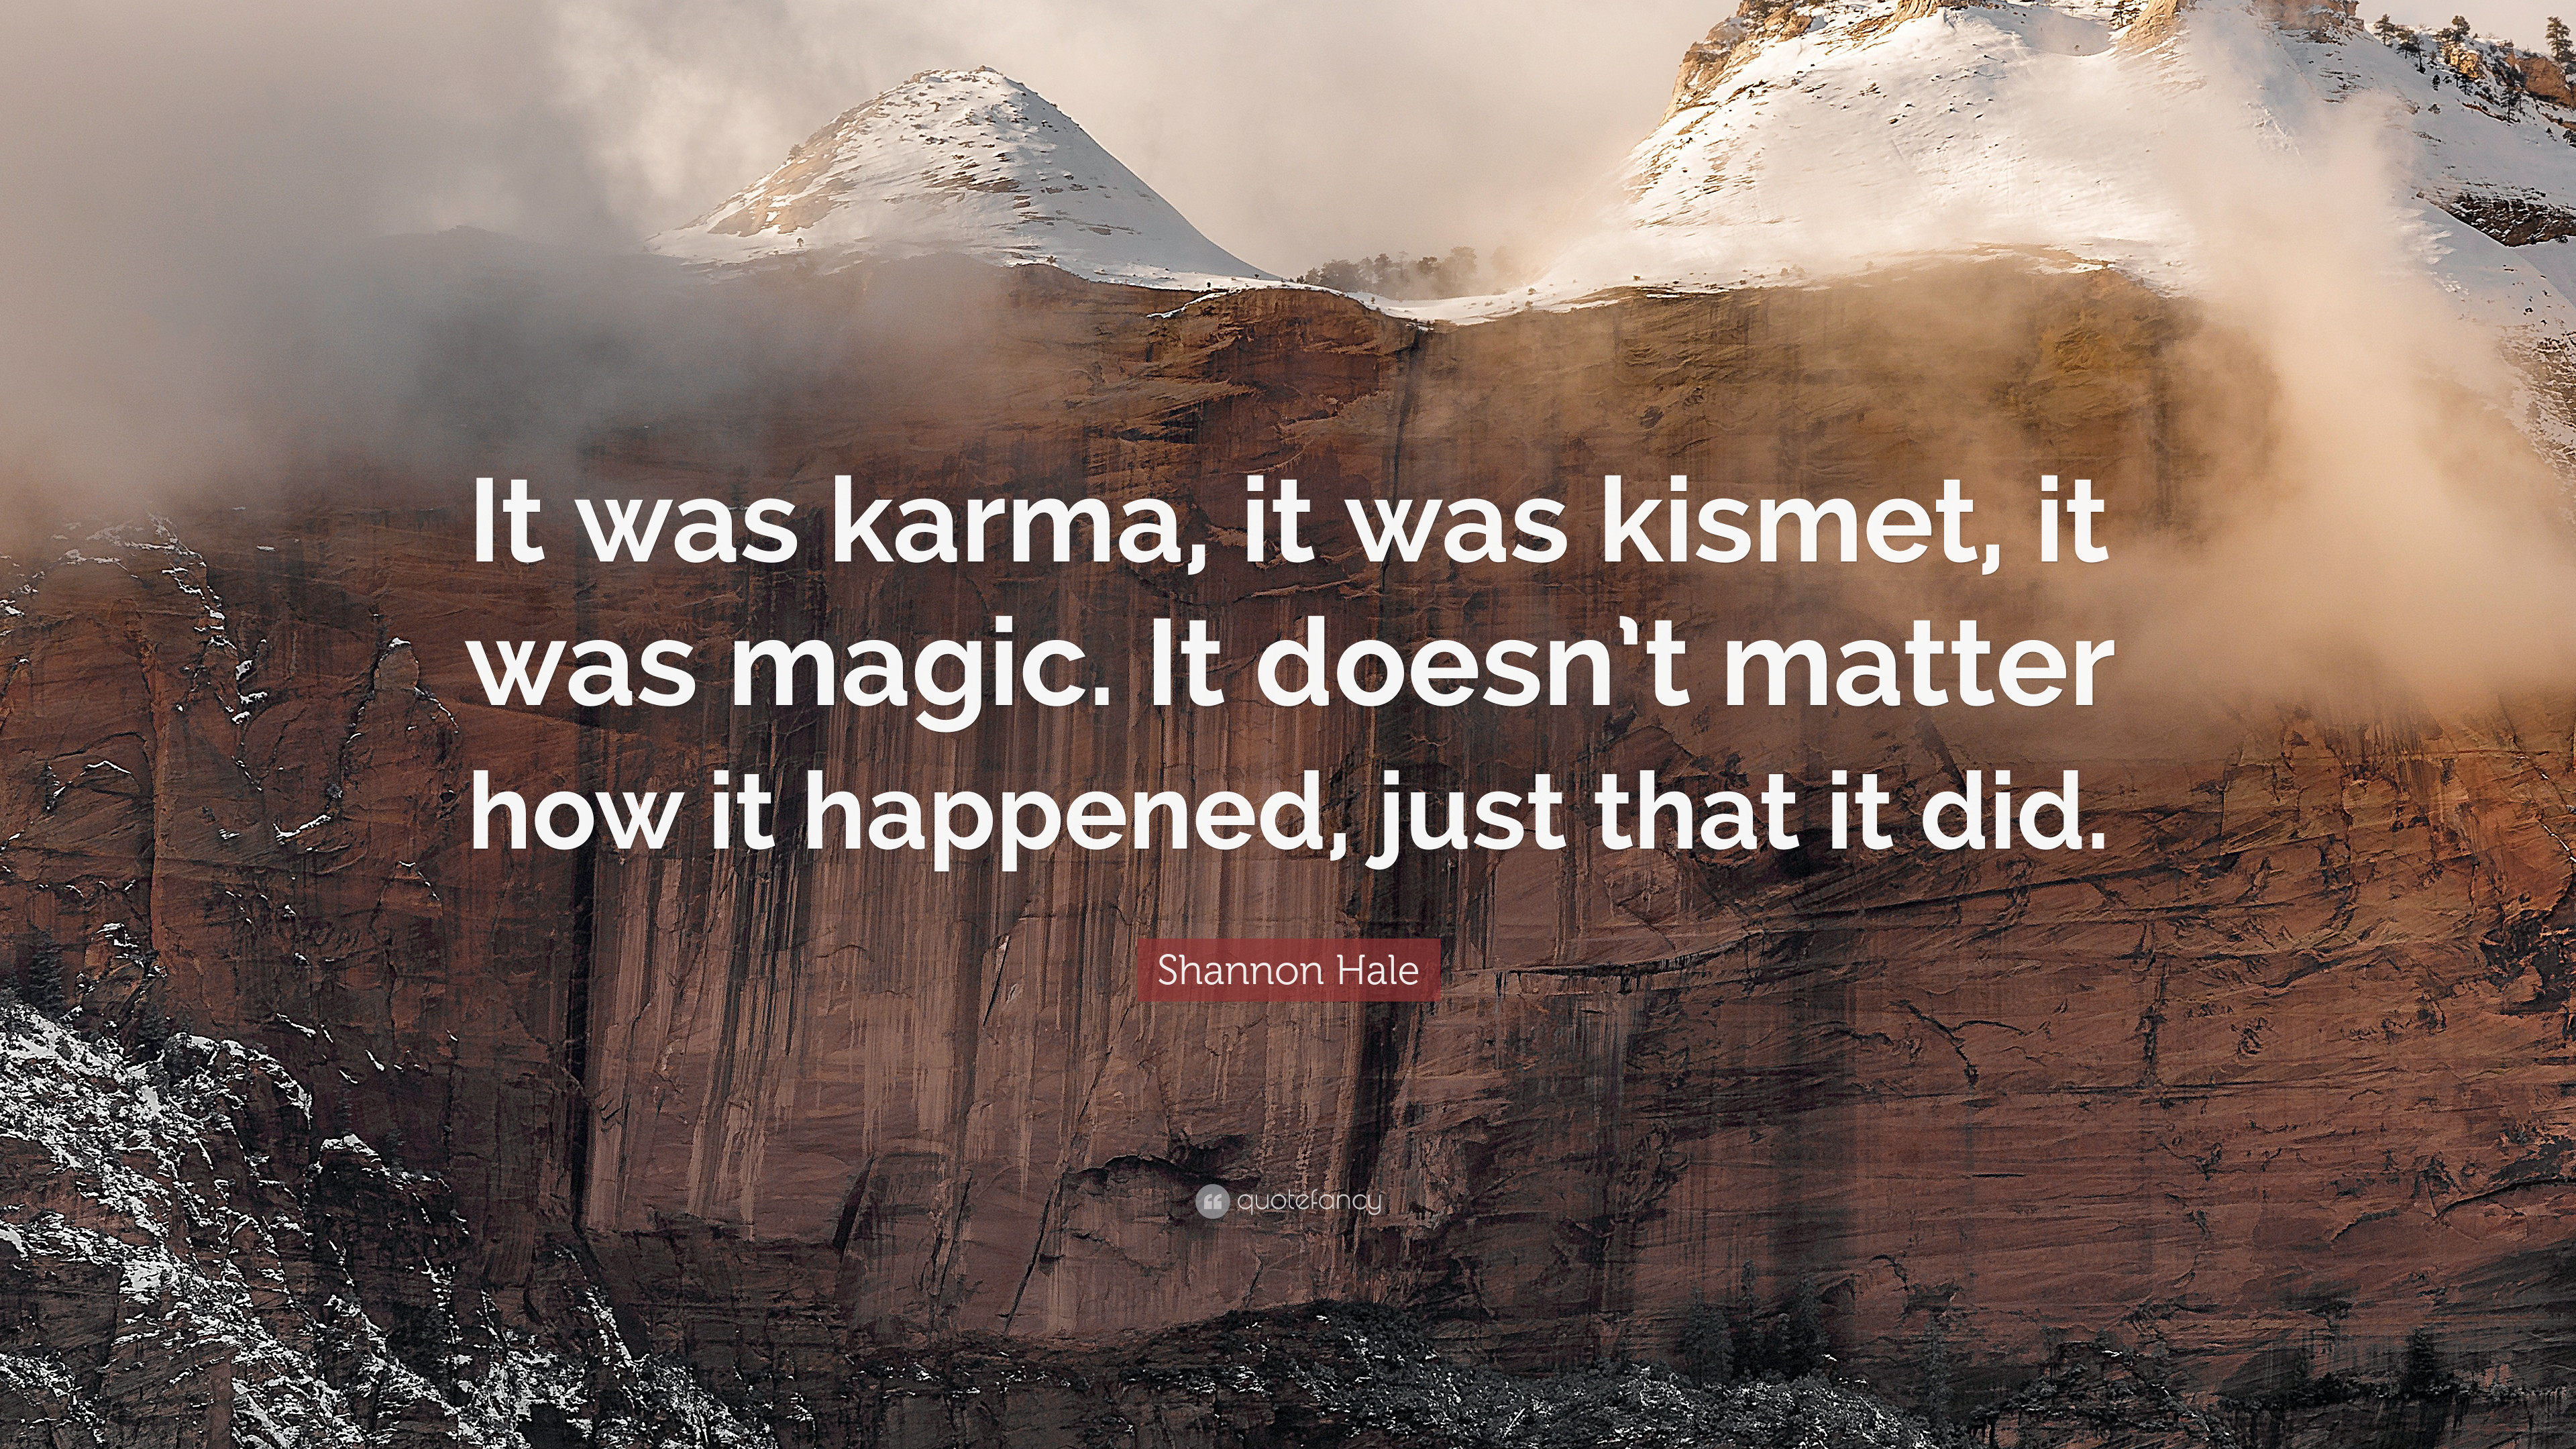 3840x2160 Shannon Hale Quote: “It was karma, it was kismet, it was magic